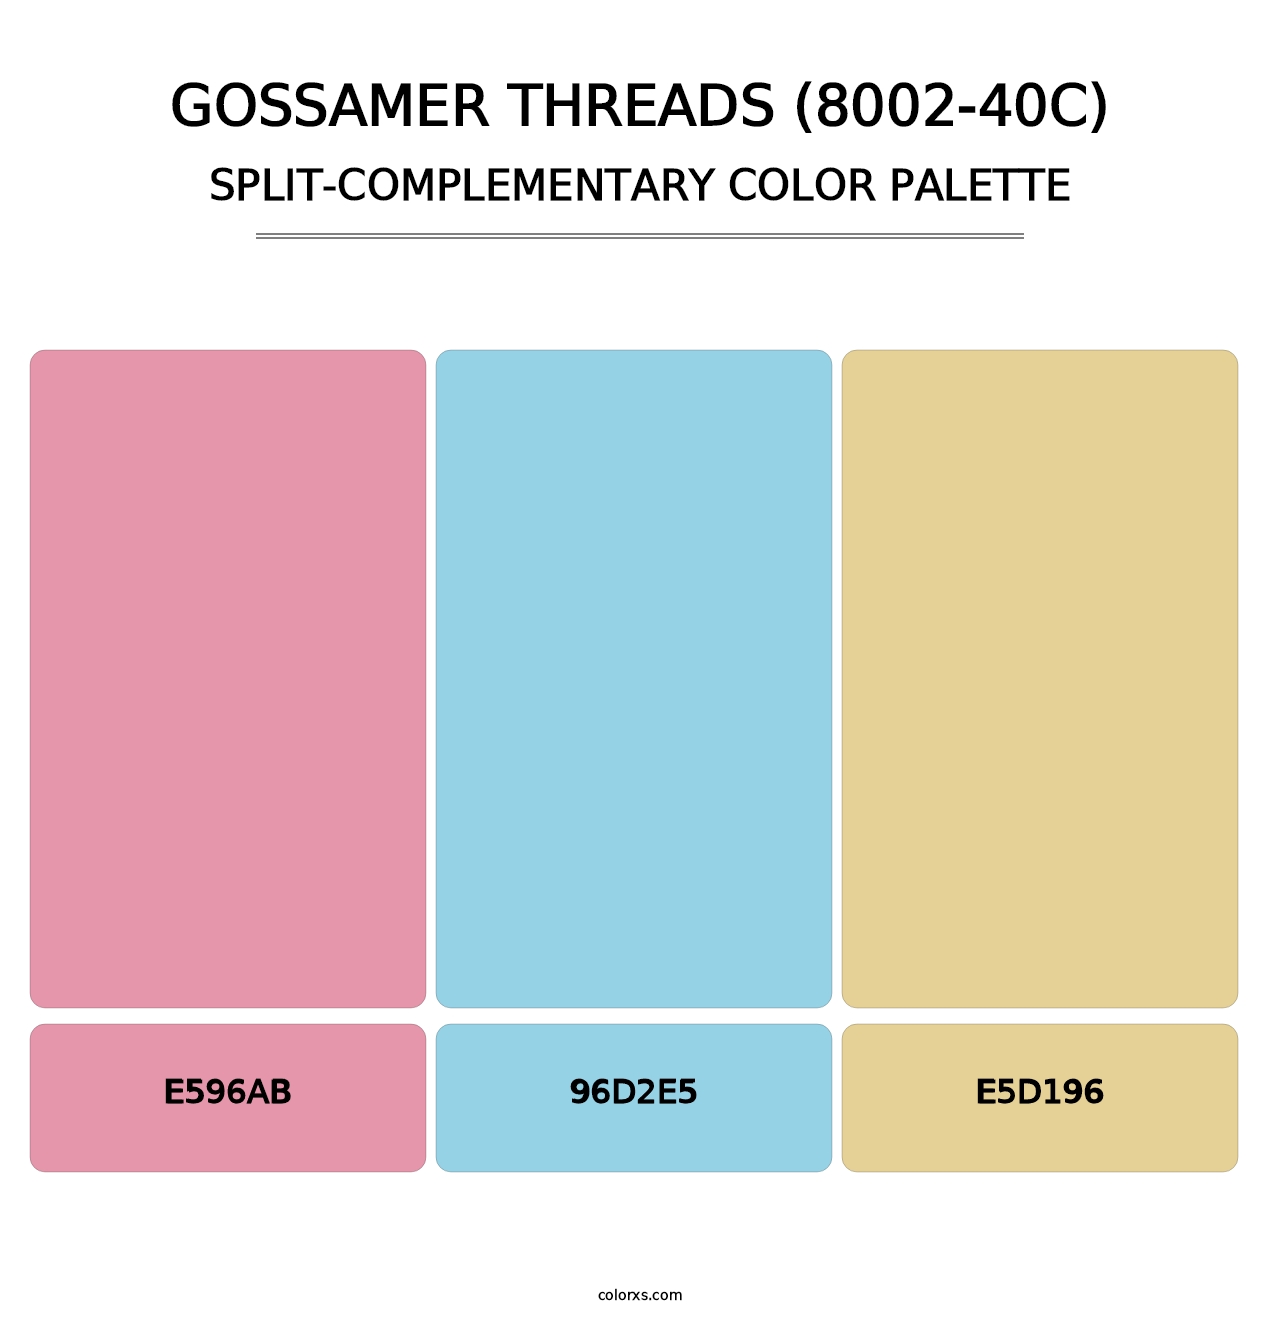 Gossamer Threads (8002-40C) - Split-Complementary Color Palette